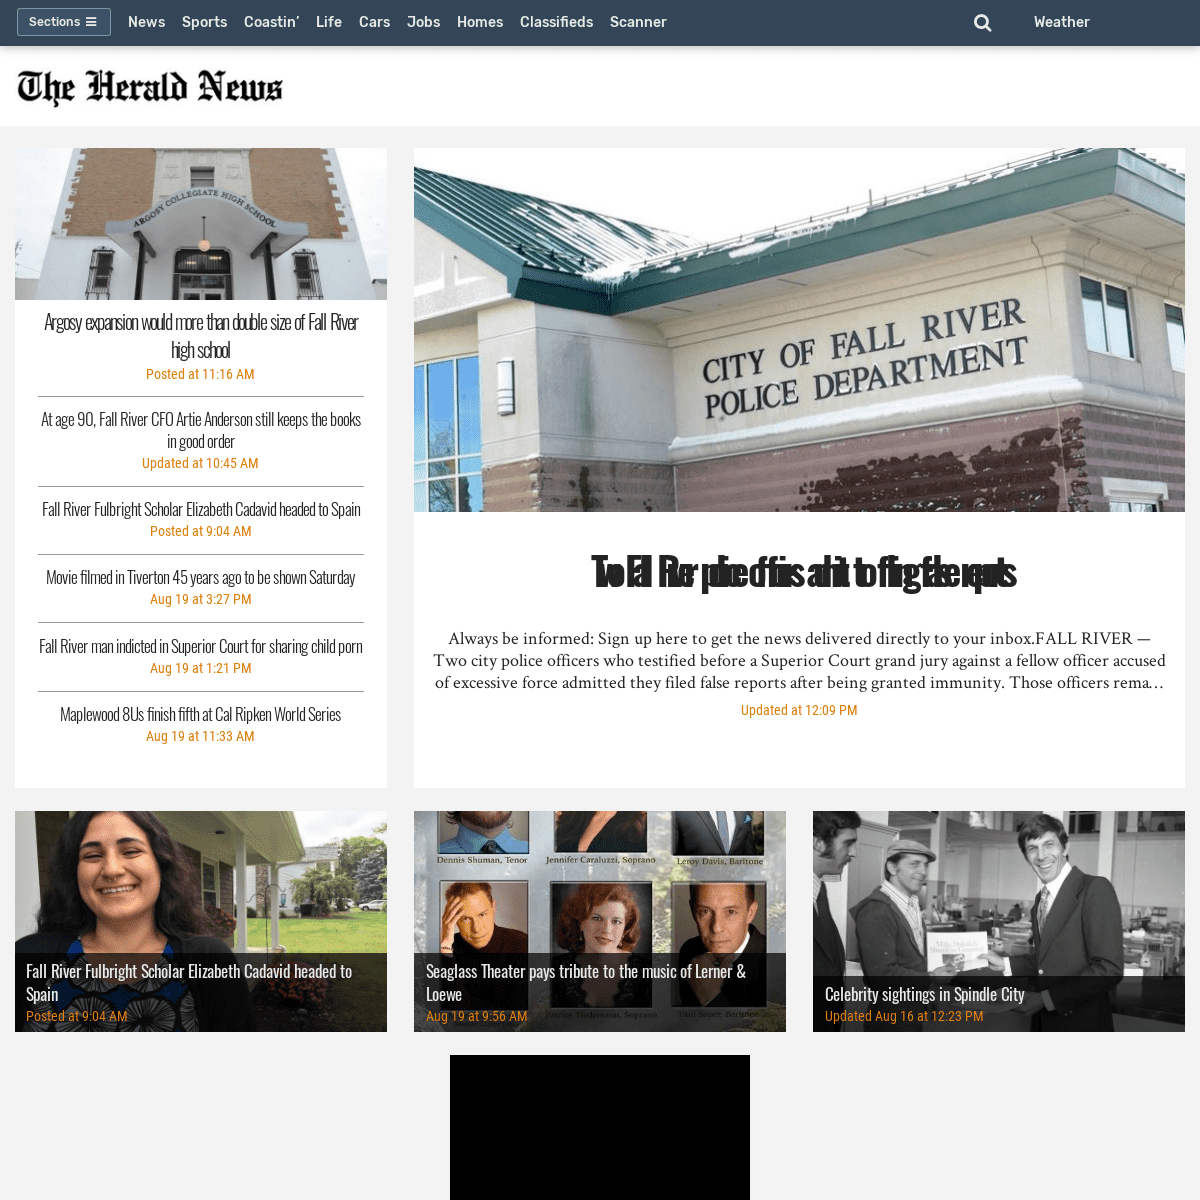 The Herald News, Fall River, MA: Local News, Politics, Entertainment & Sports in Fall River, MA